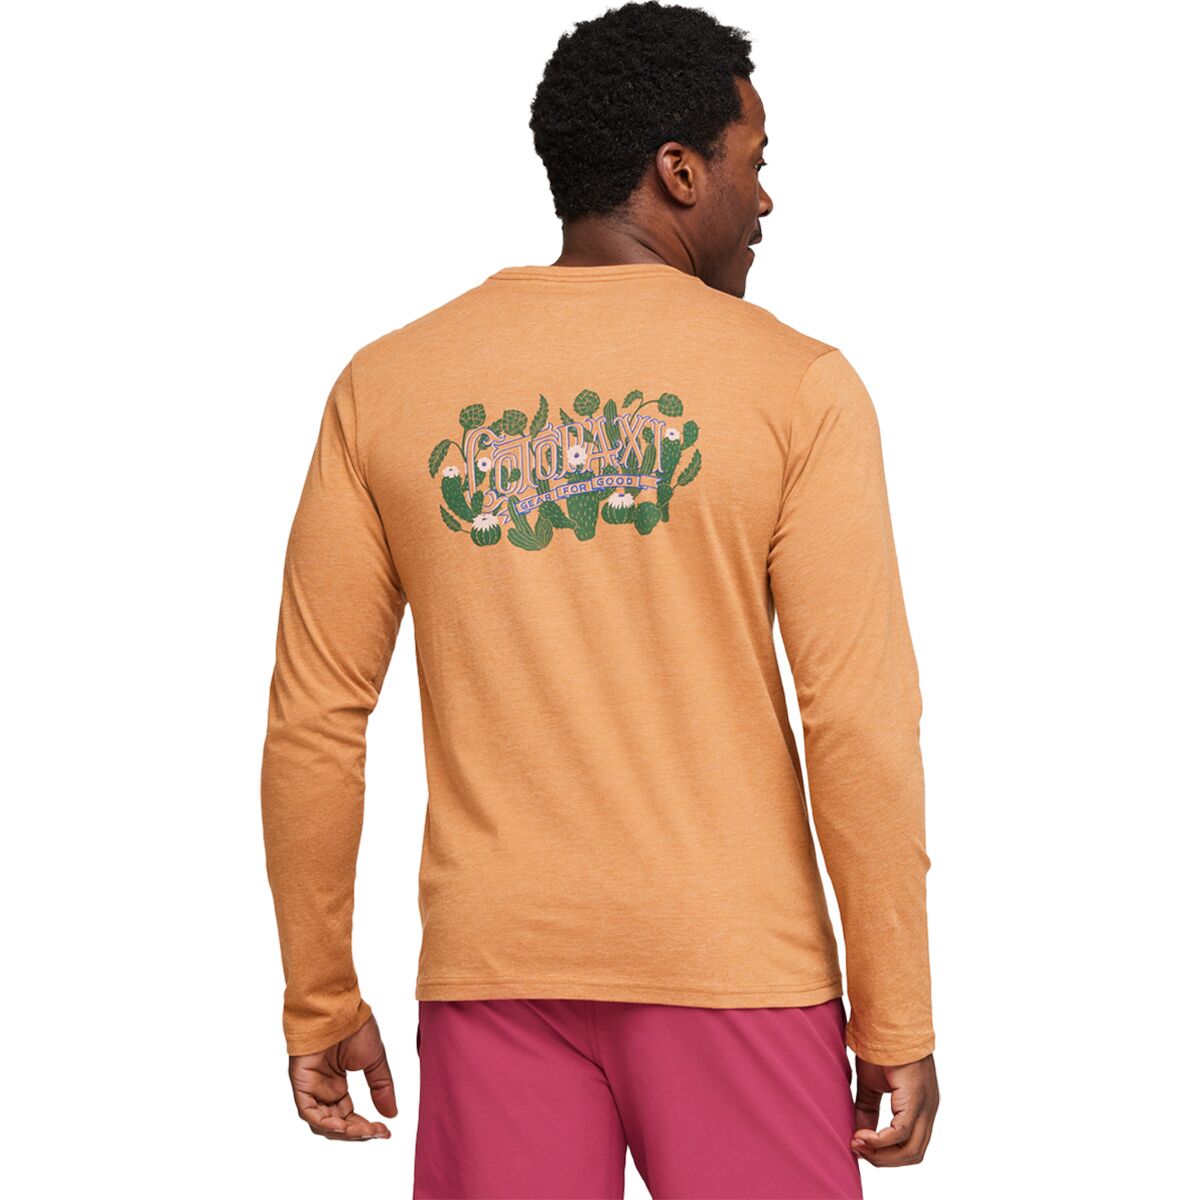 Cactus Life Long-Sleeve Organic T-Shirt - Men